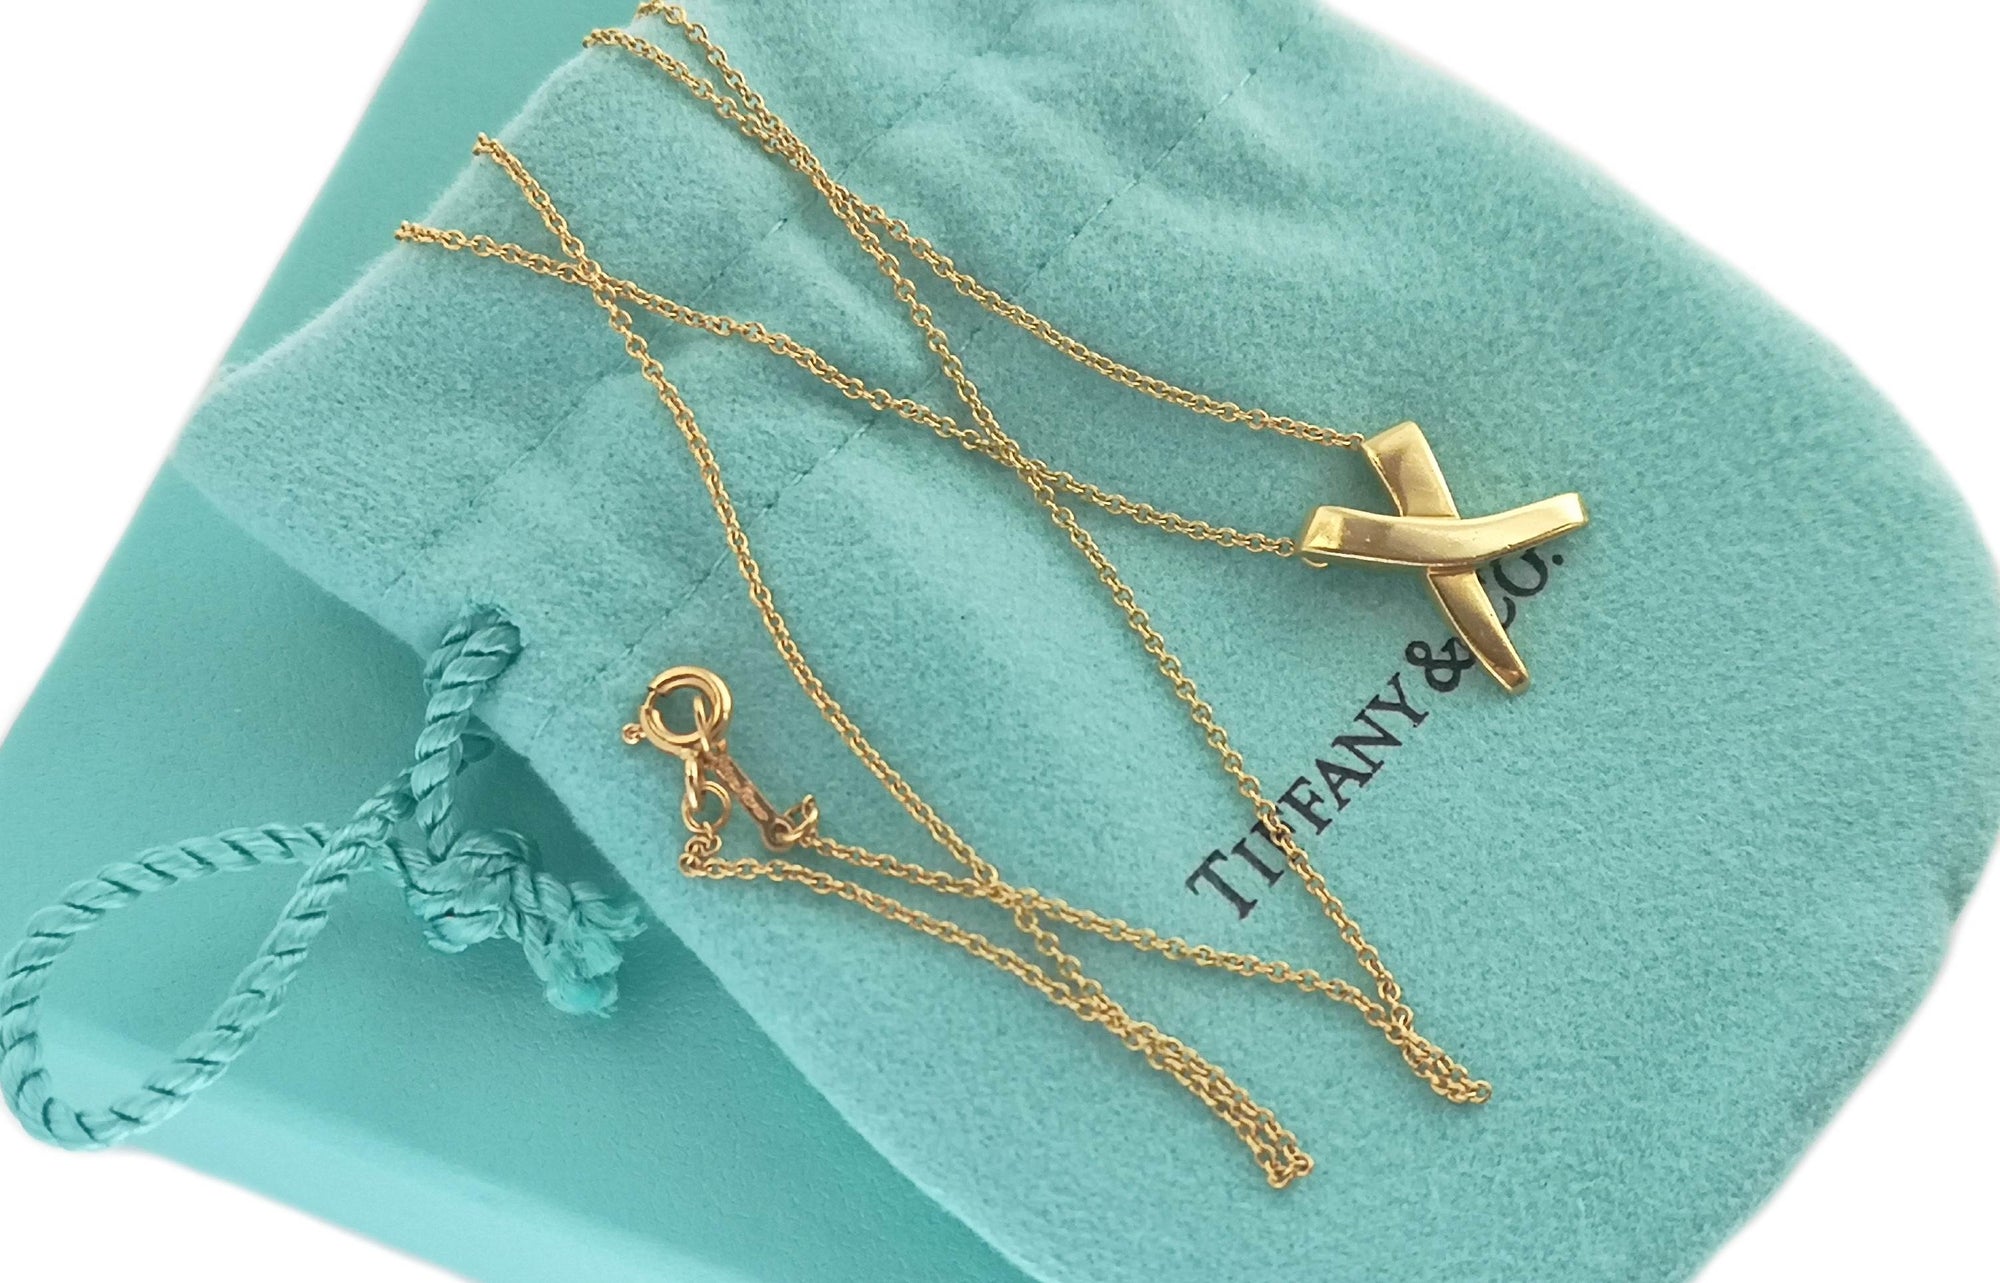 Tiffany & Co. Paloma Picasso Graffiti X Kiss Necklace | Tiffany & co.,  Necklace, Paloma picasso